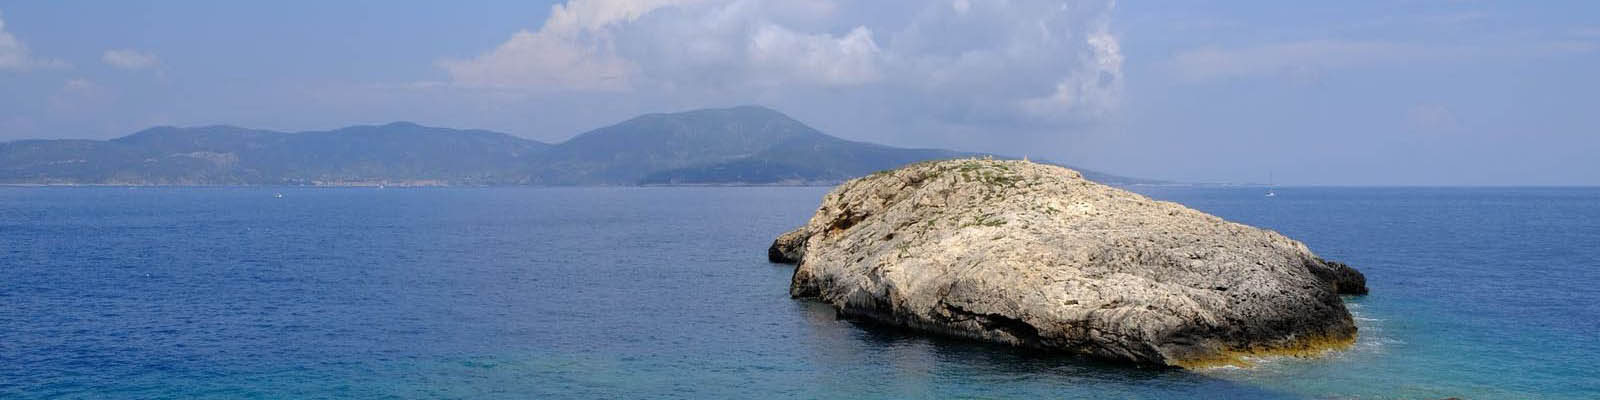 Water and Island Landscape Croatia